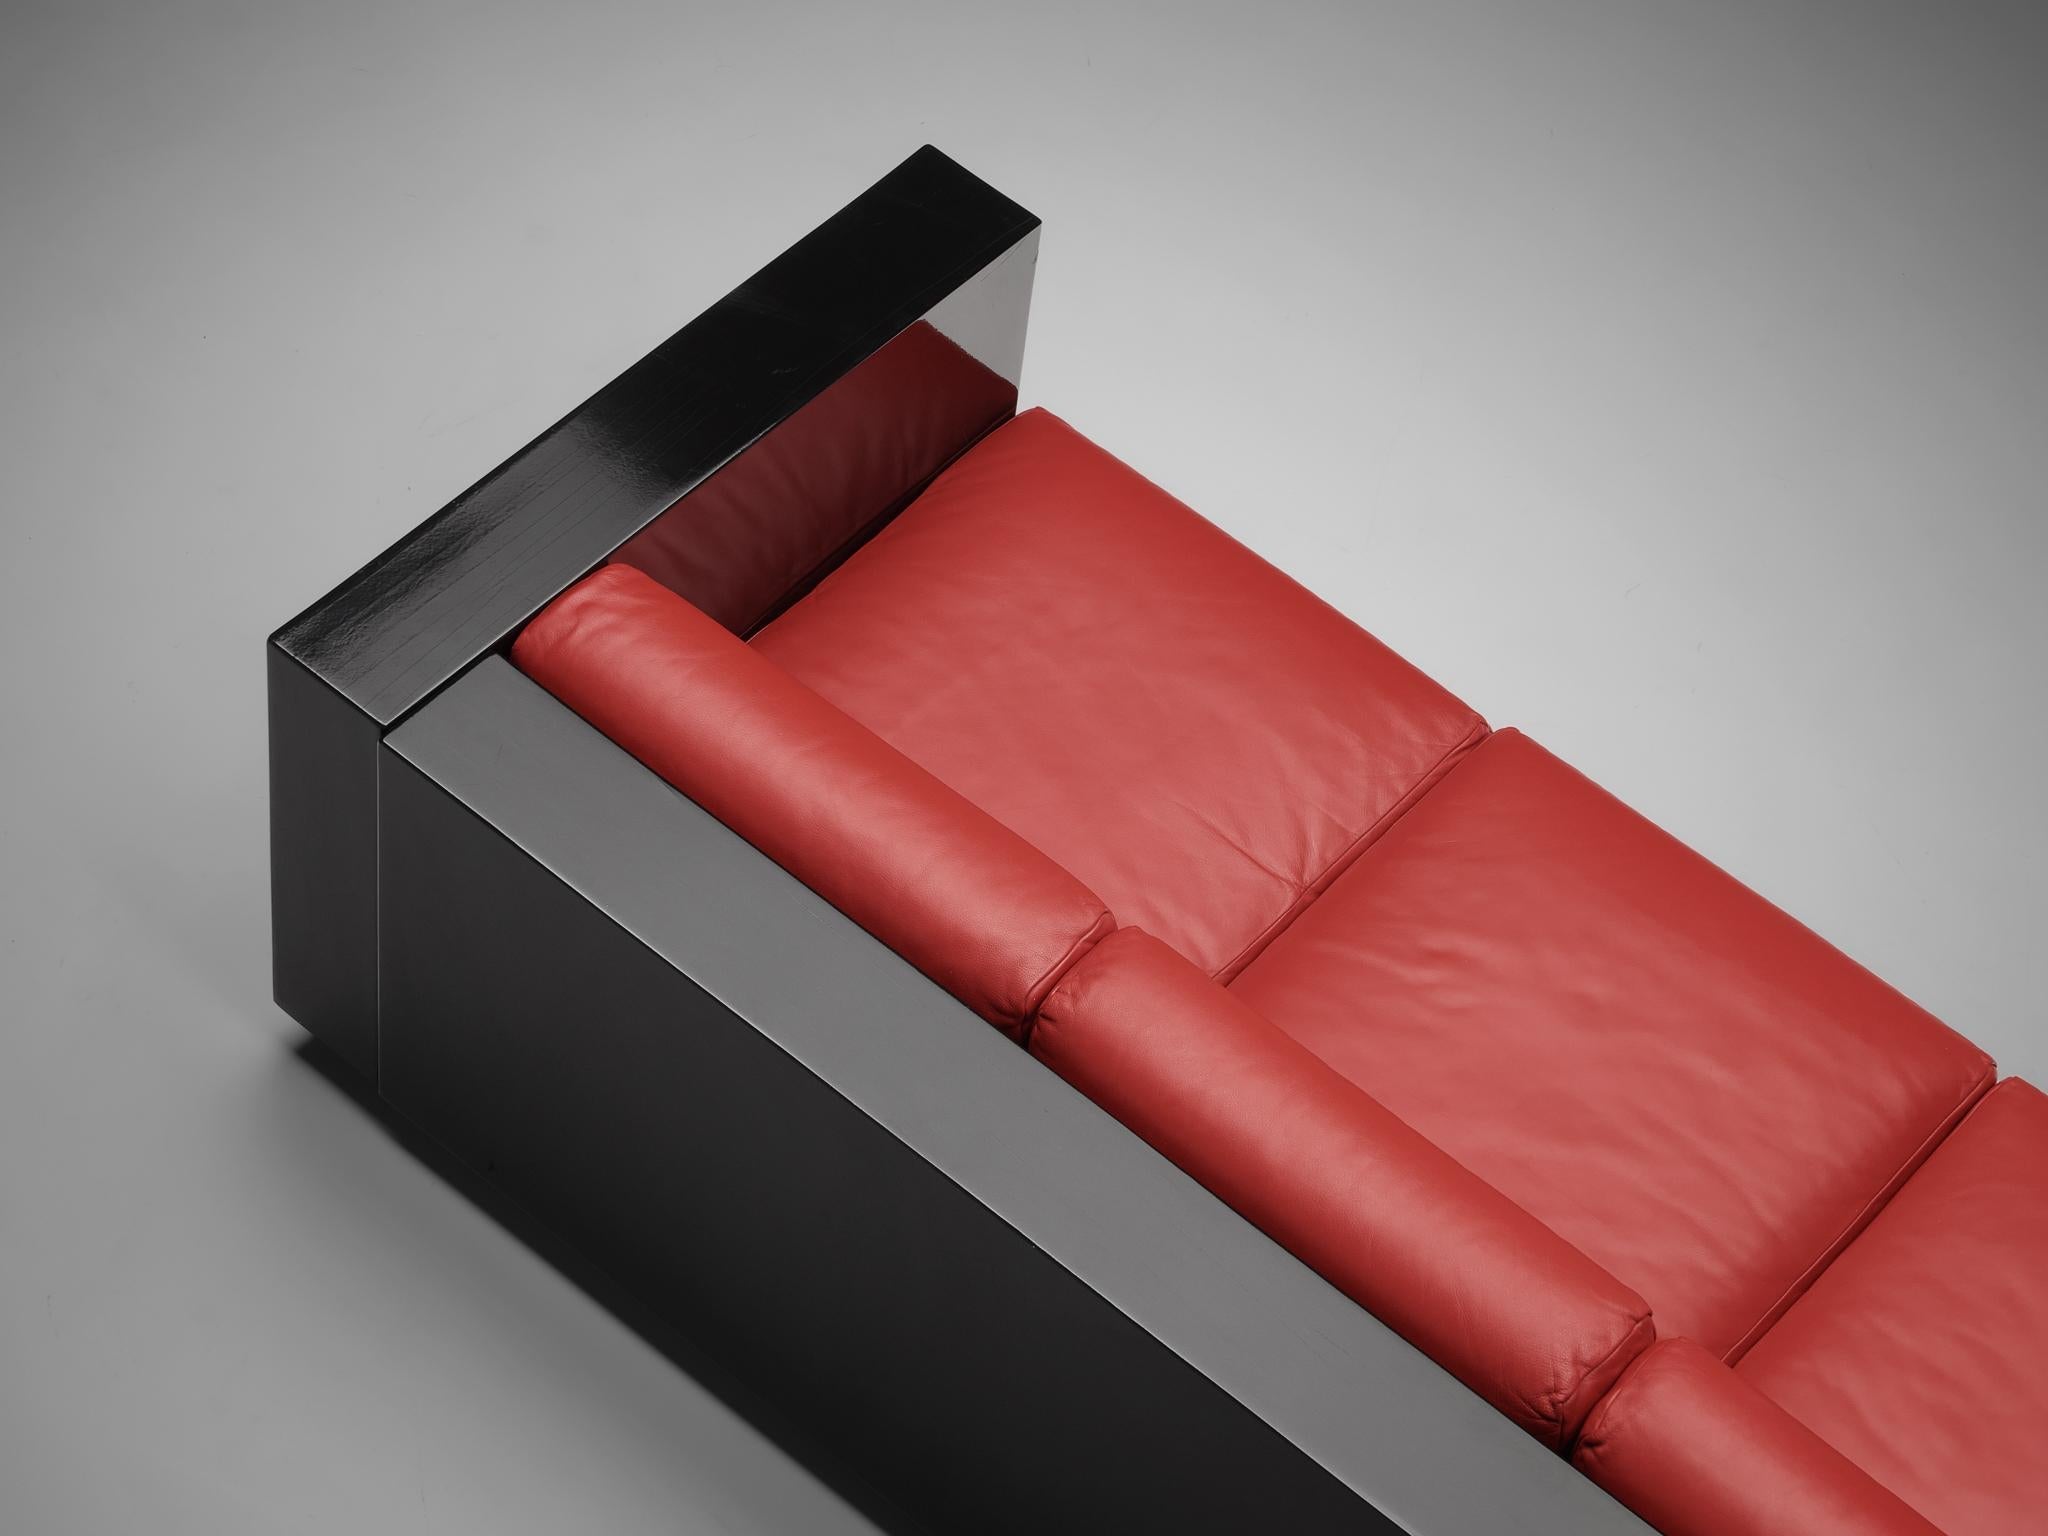 Vignelli Saratoga Large Black Sofa in Red Leather